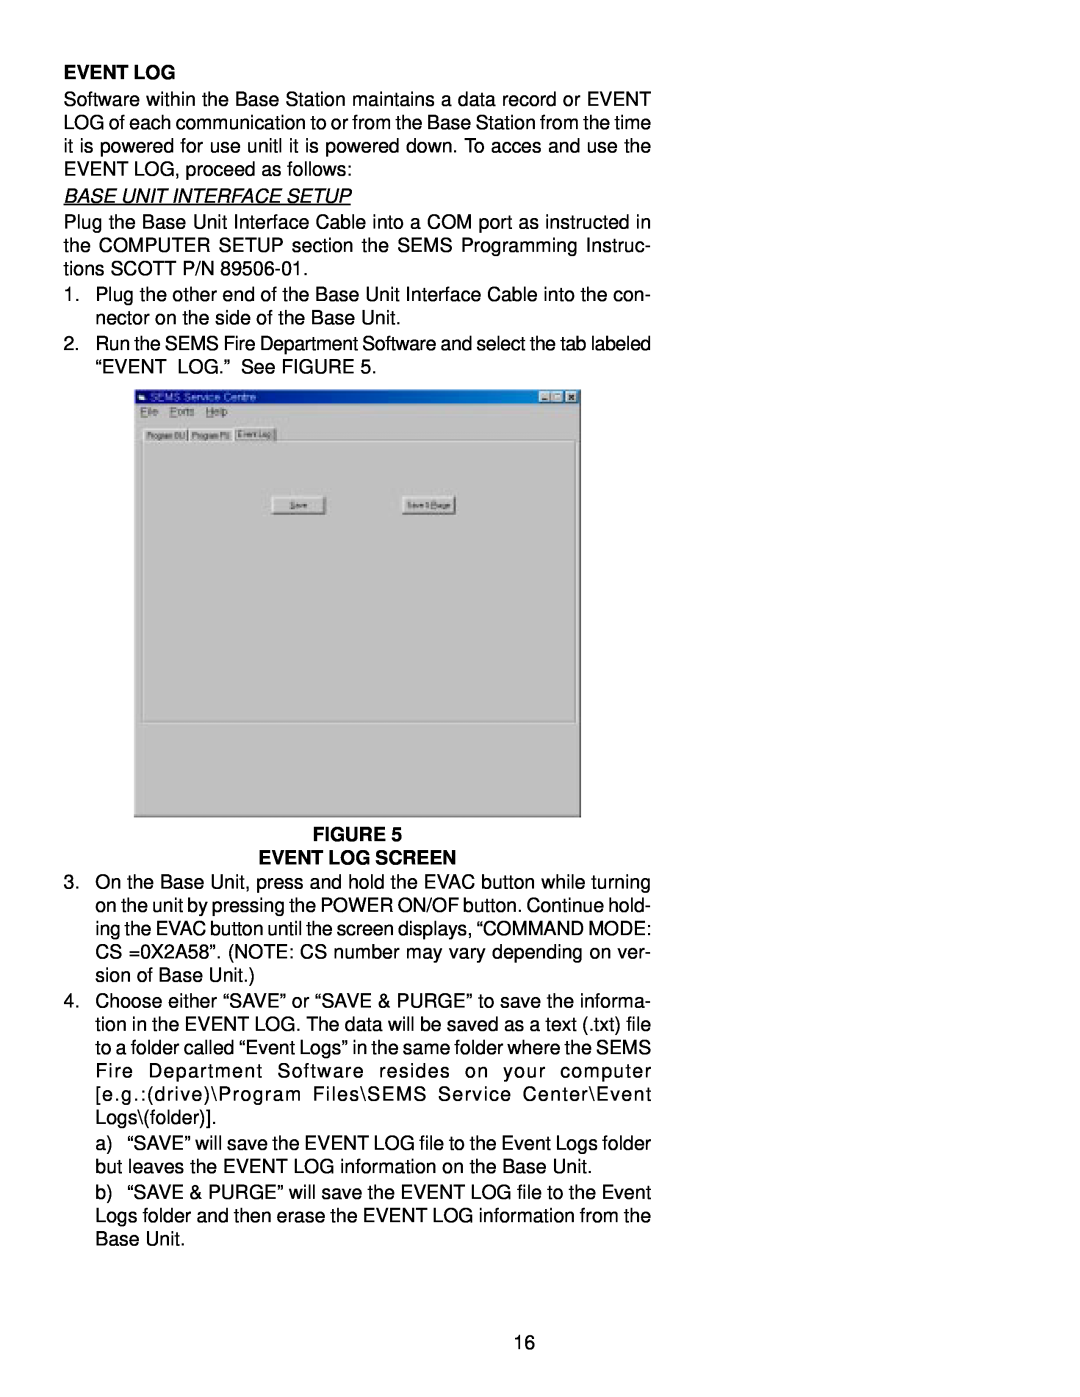 Scott 3, 4.5, 2.2 manual Base Unit Interface Setup, Event Log Screen 